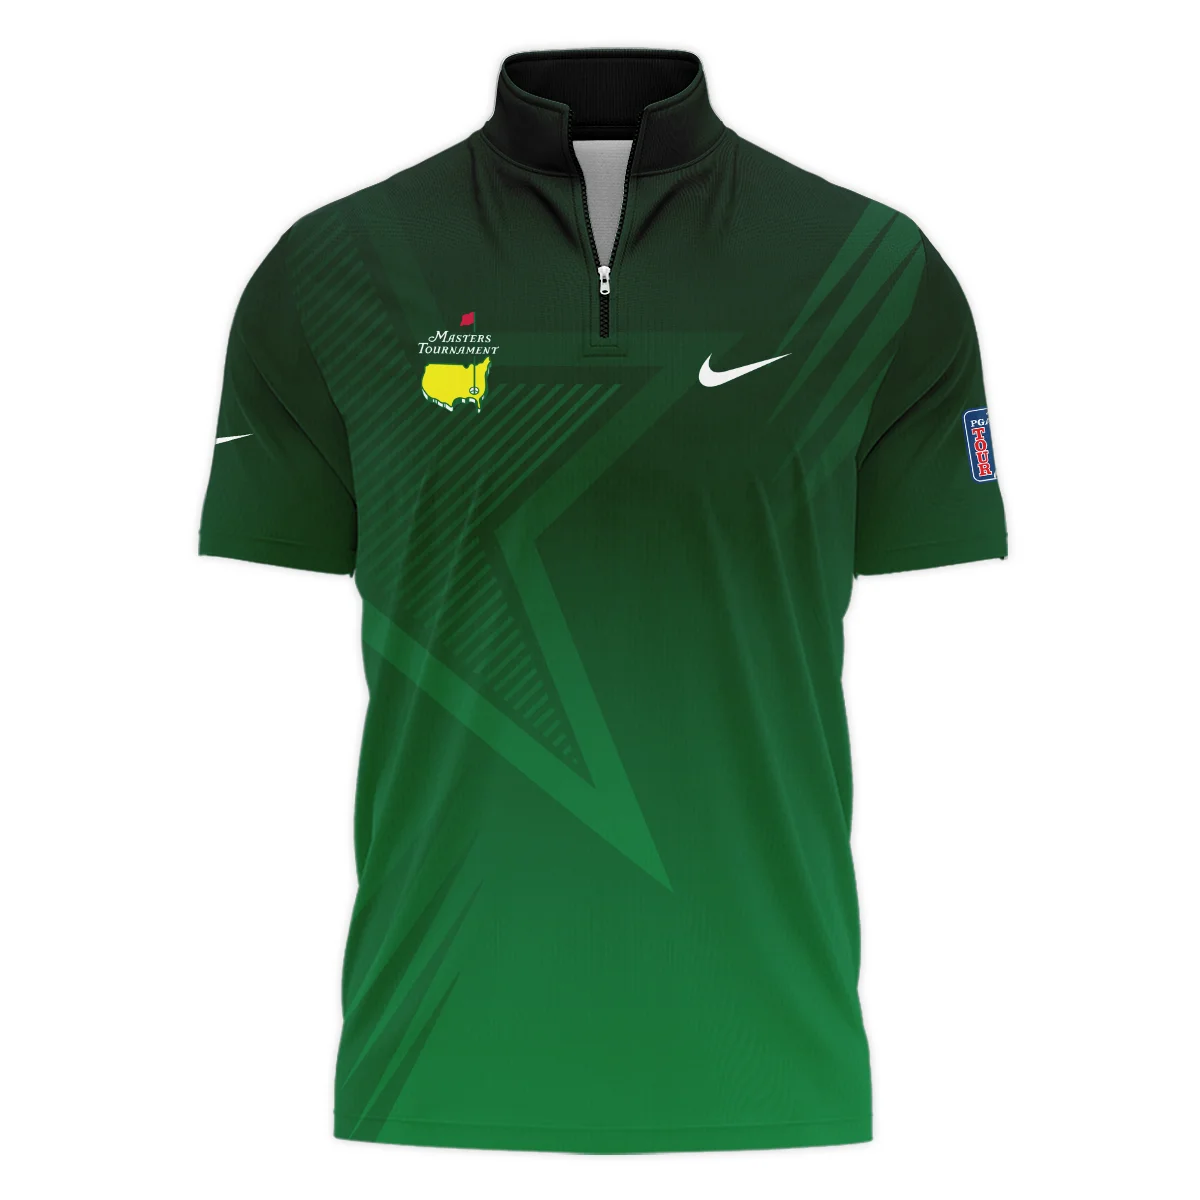 Nike Masters Tournament Polo Shirt Dark Green Gradient Star Pattern Golf Sports Vneck Polo Shirt Style Classic Polo Shirt For Men